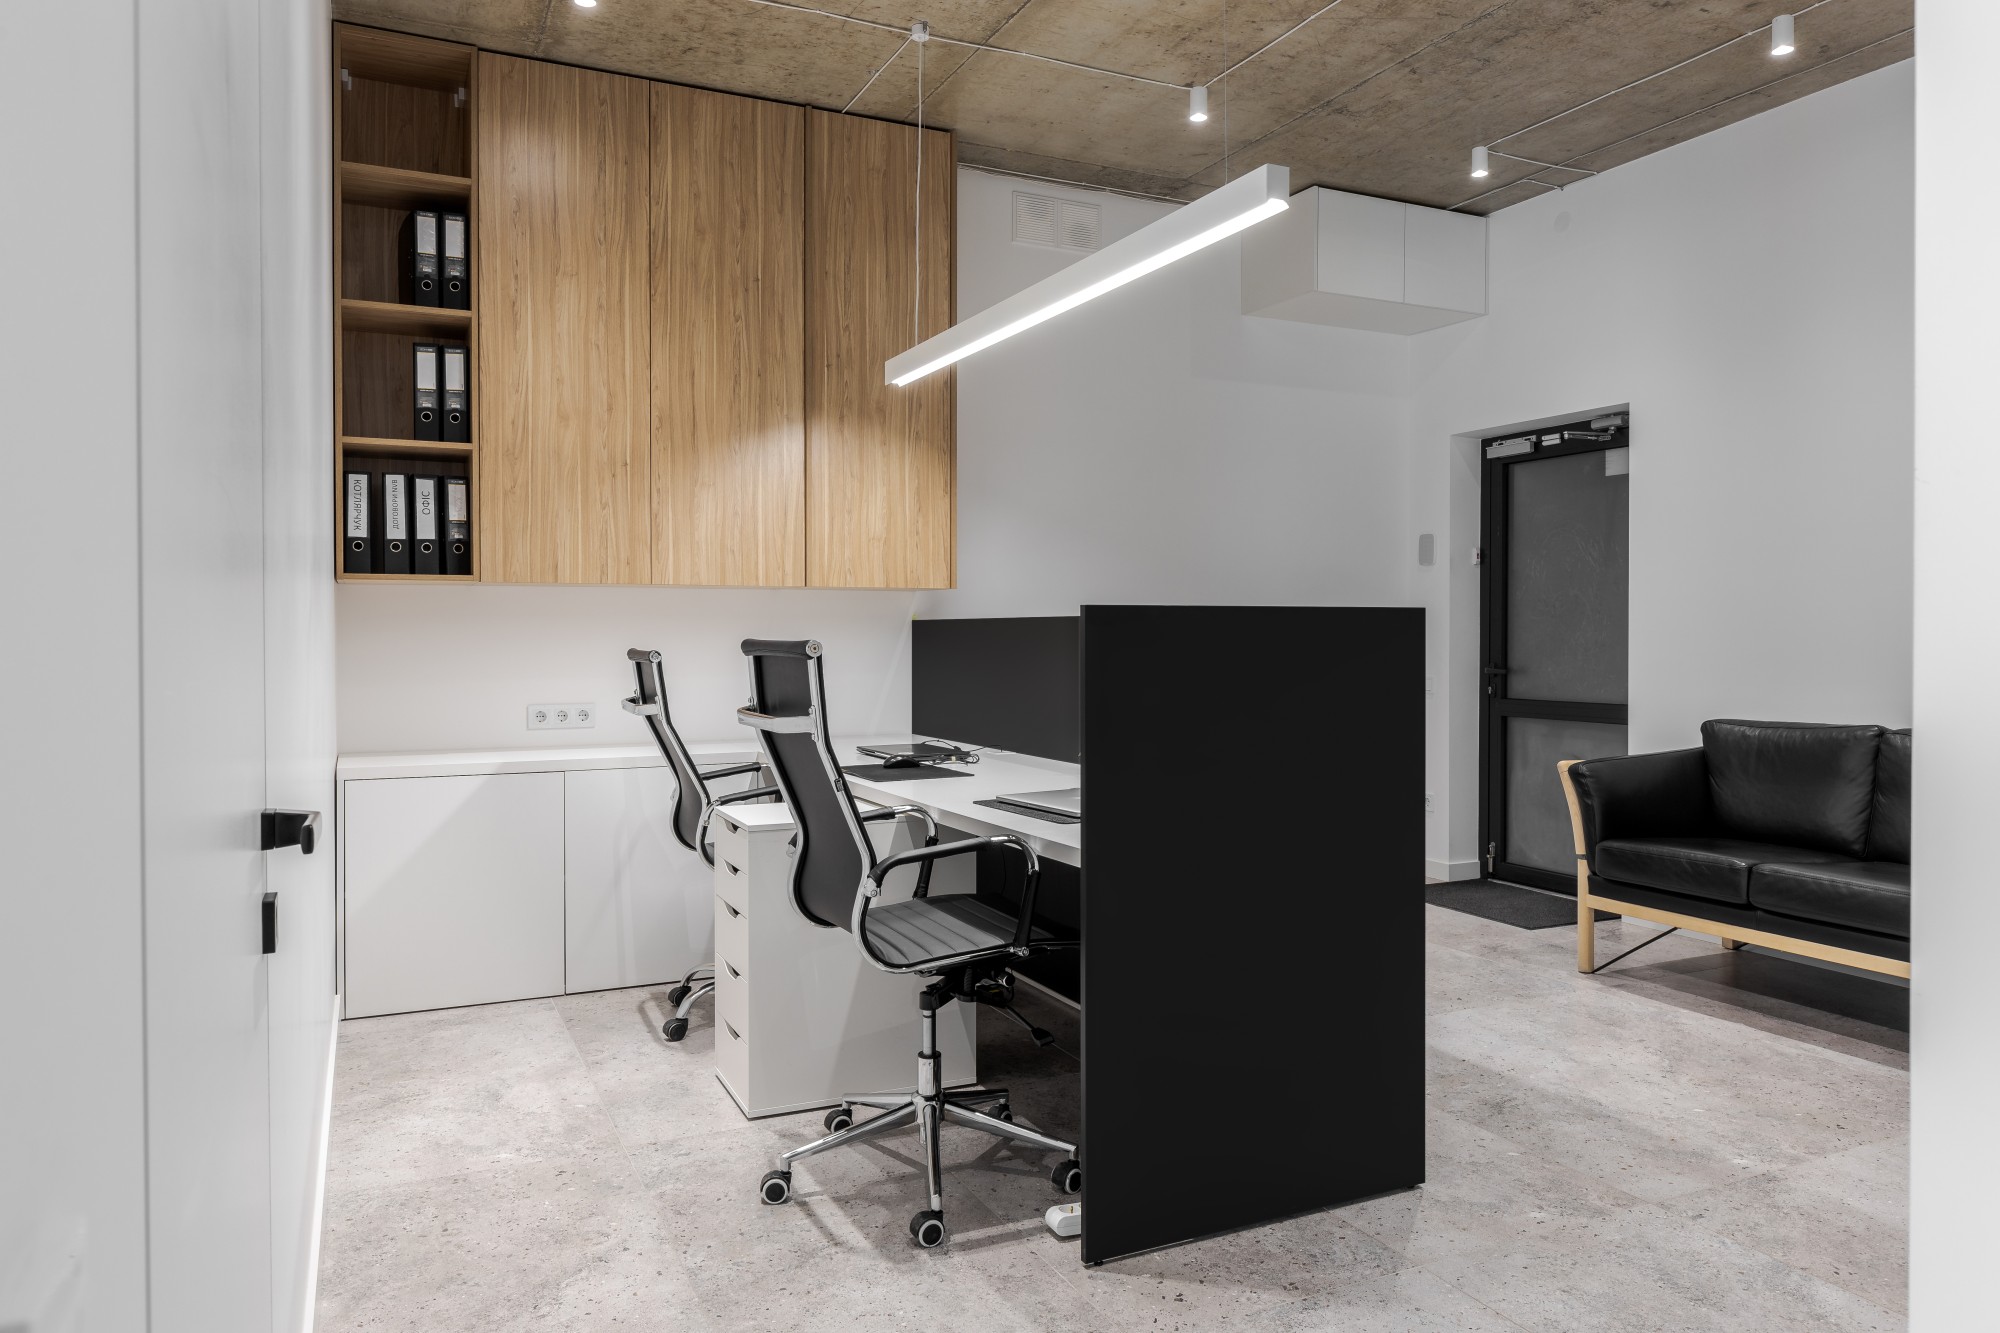 NVB Architects Studio office / RC National